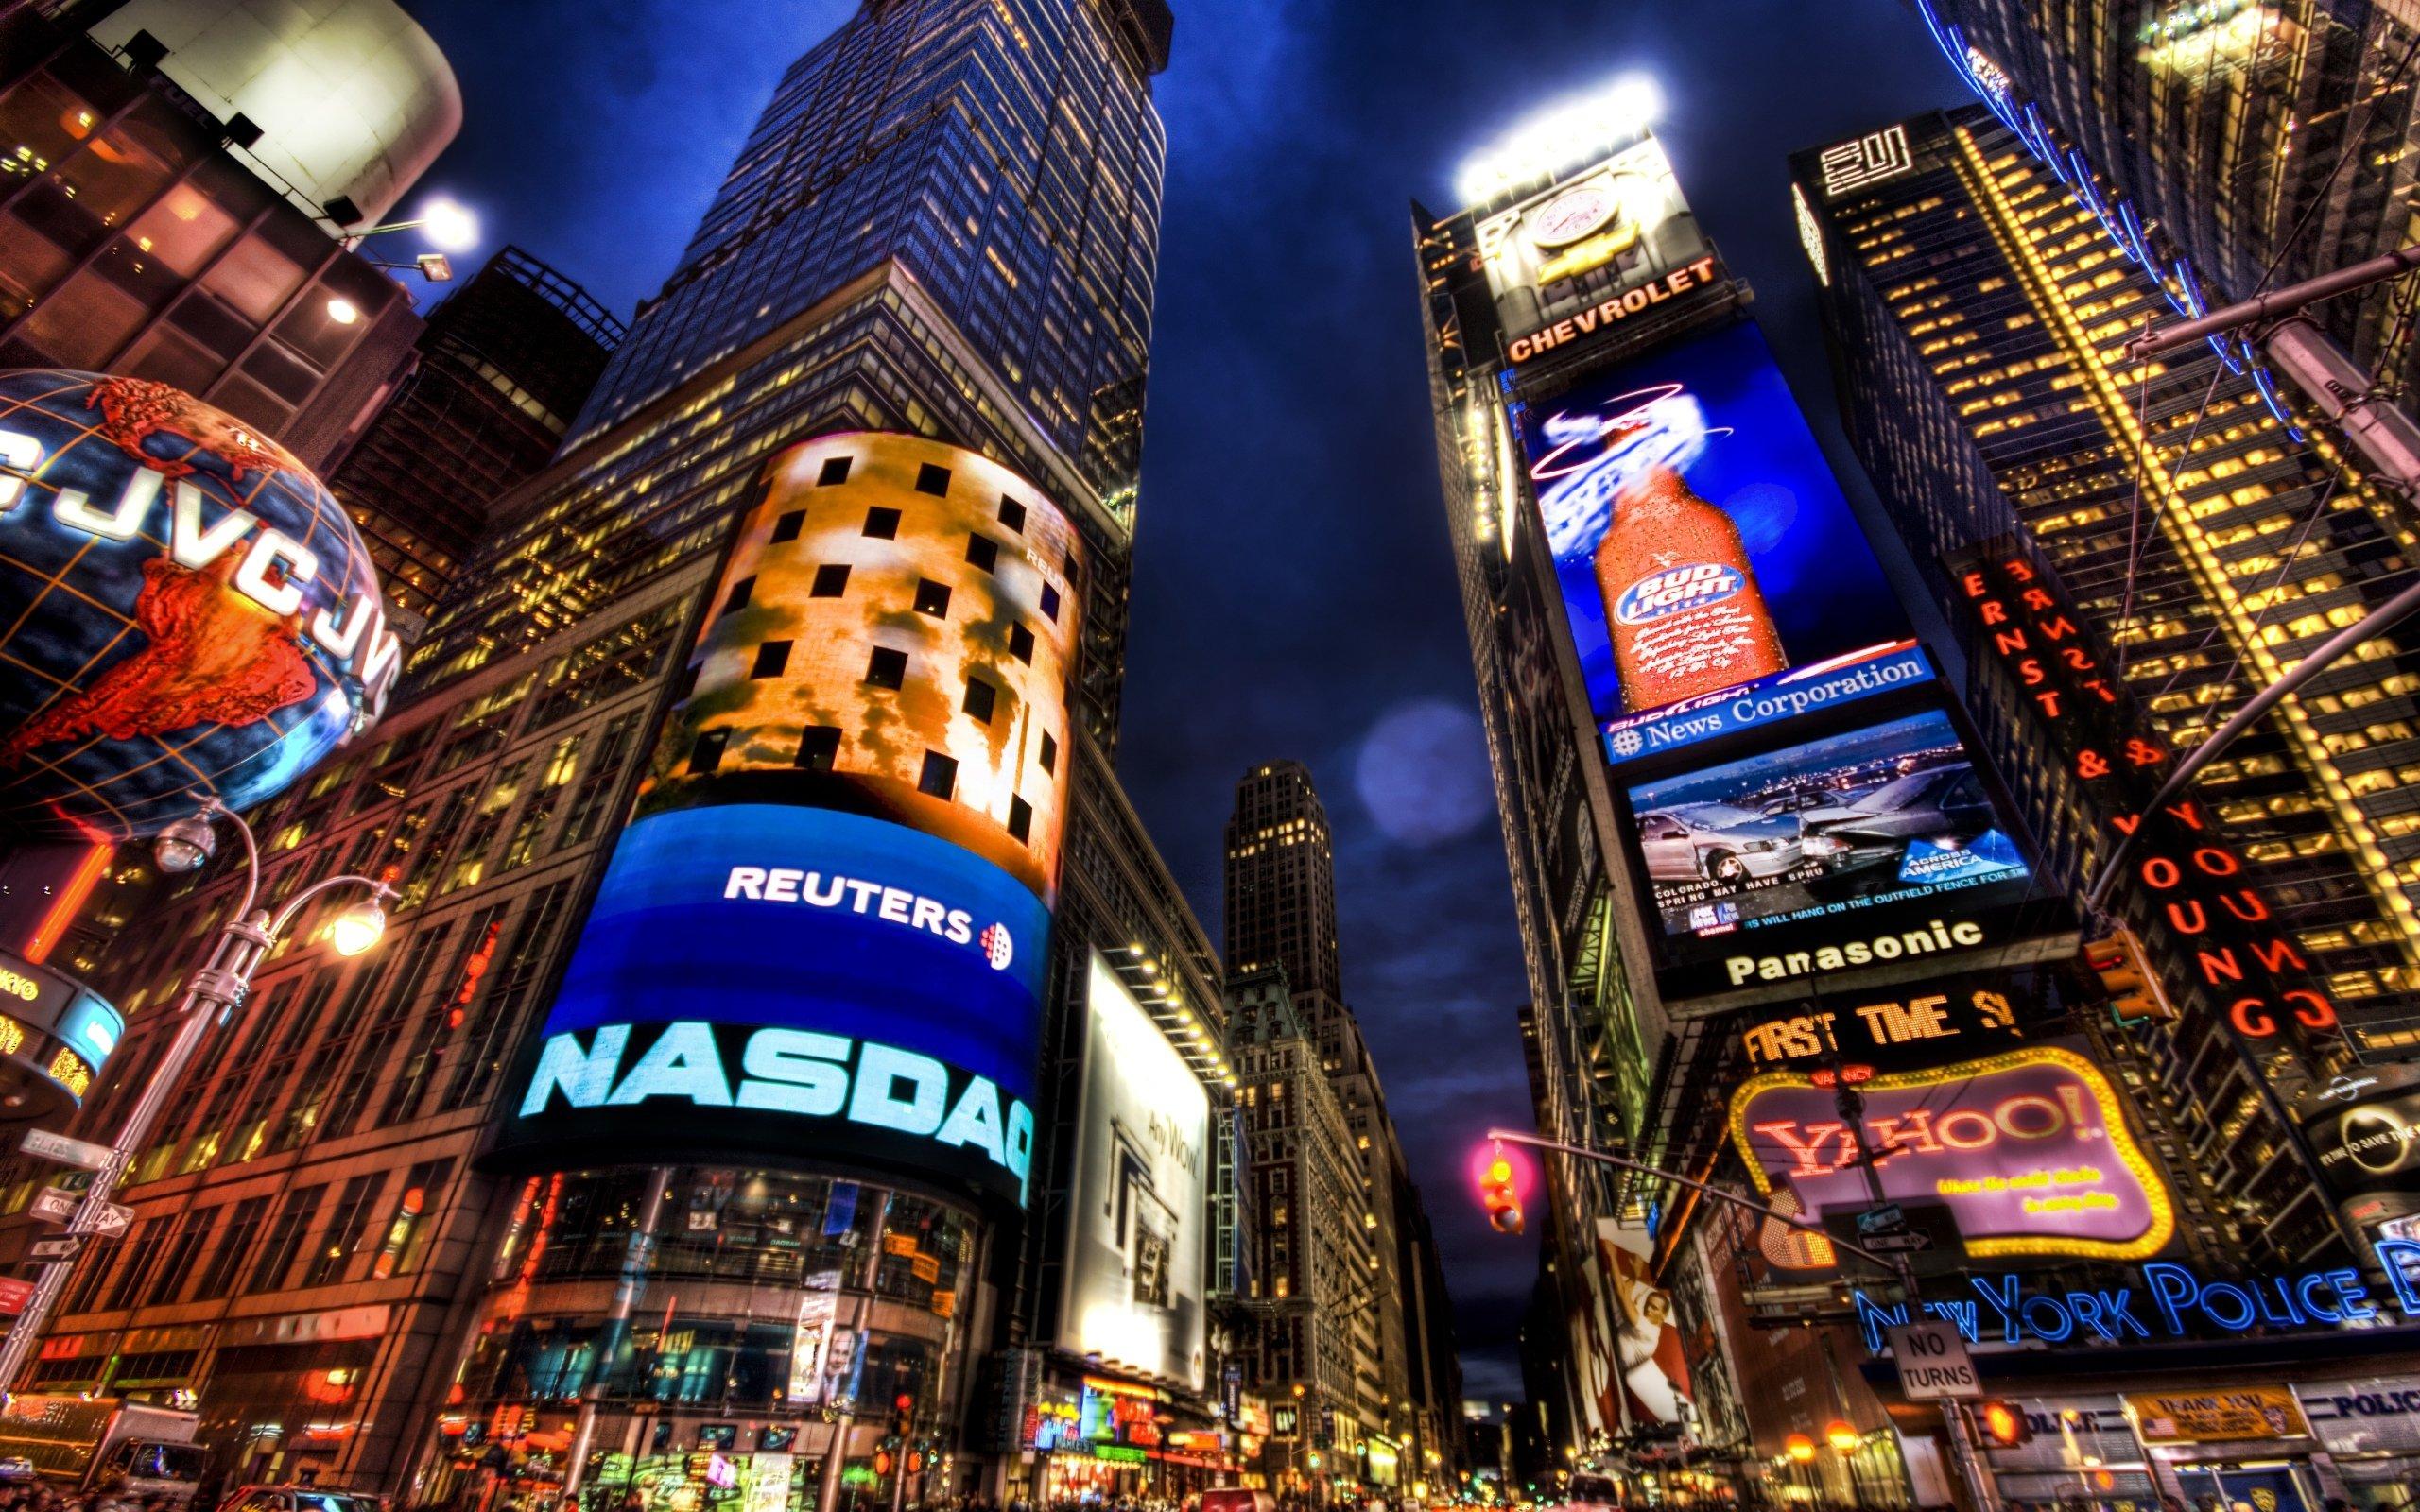 Times Square wallpaper HD for desktop background